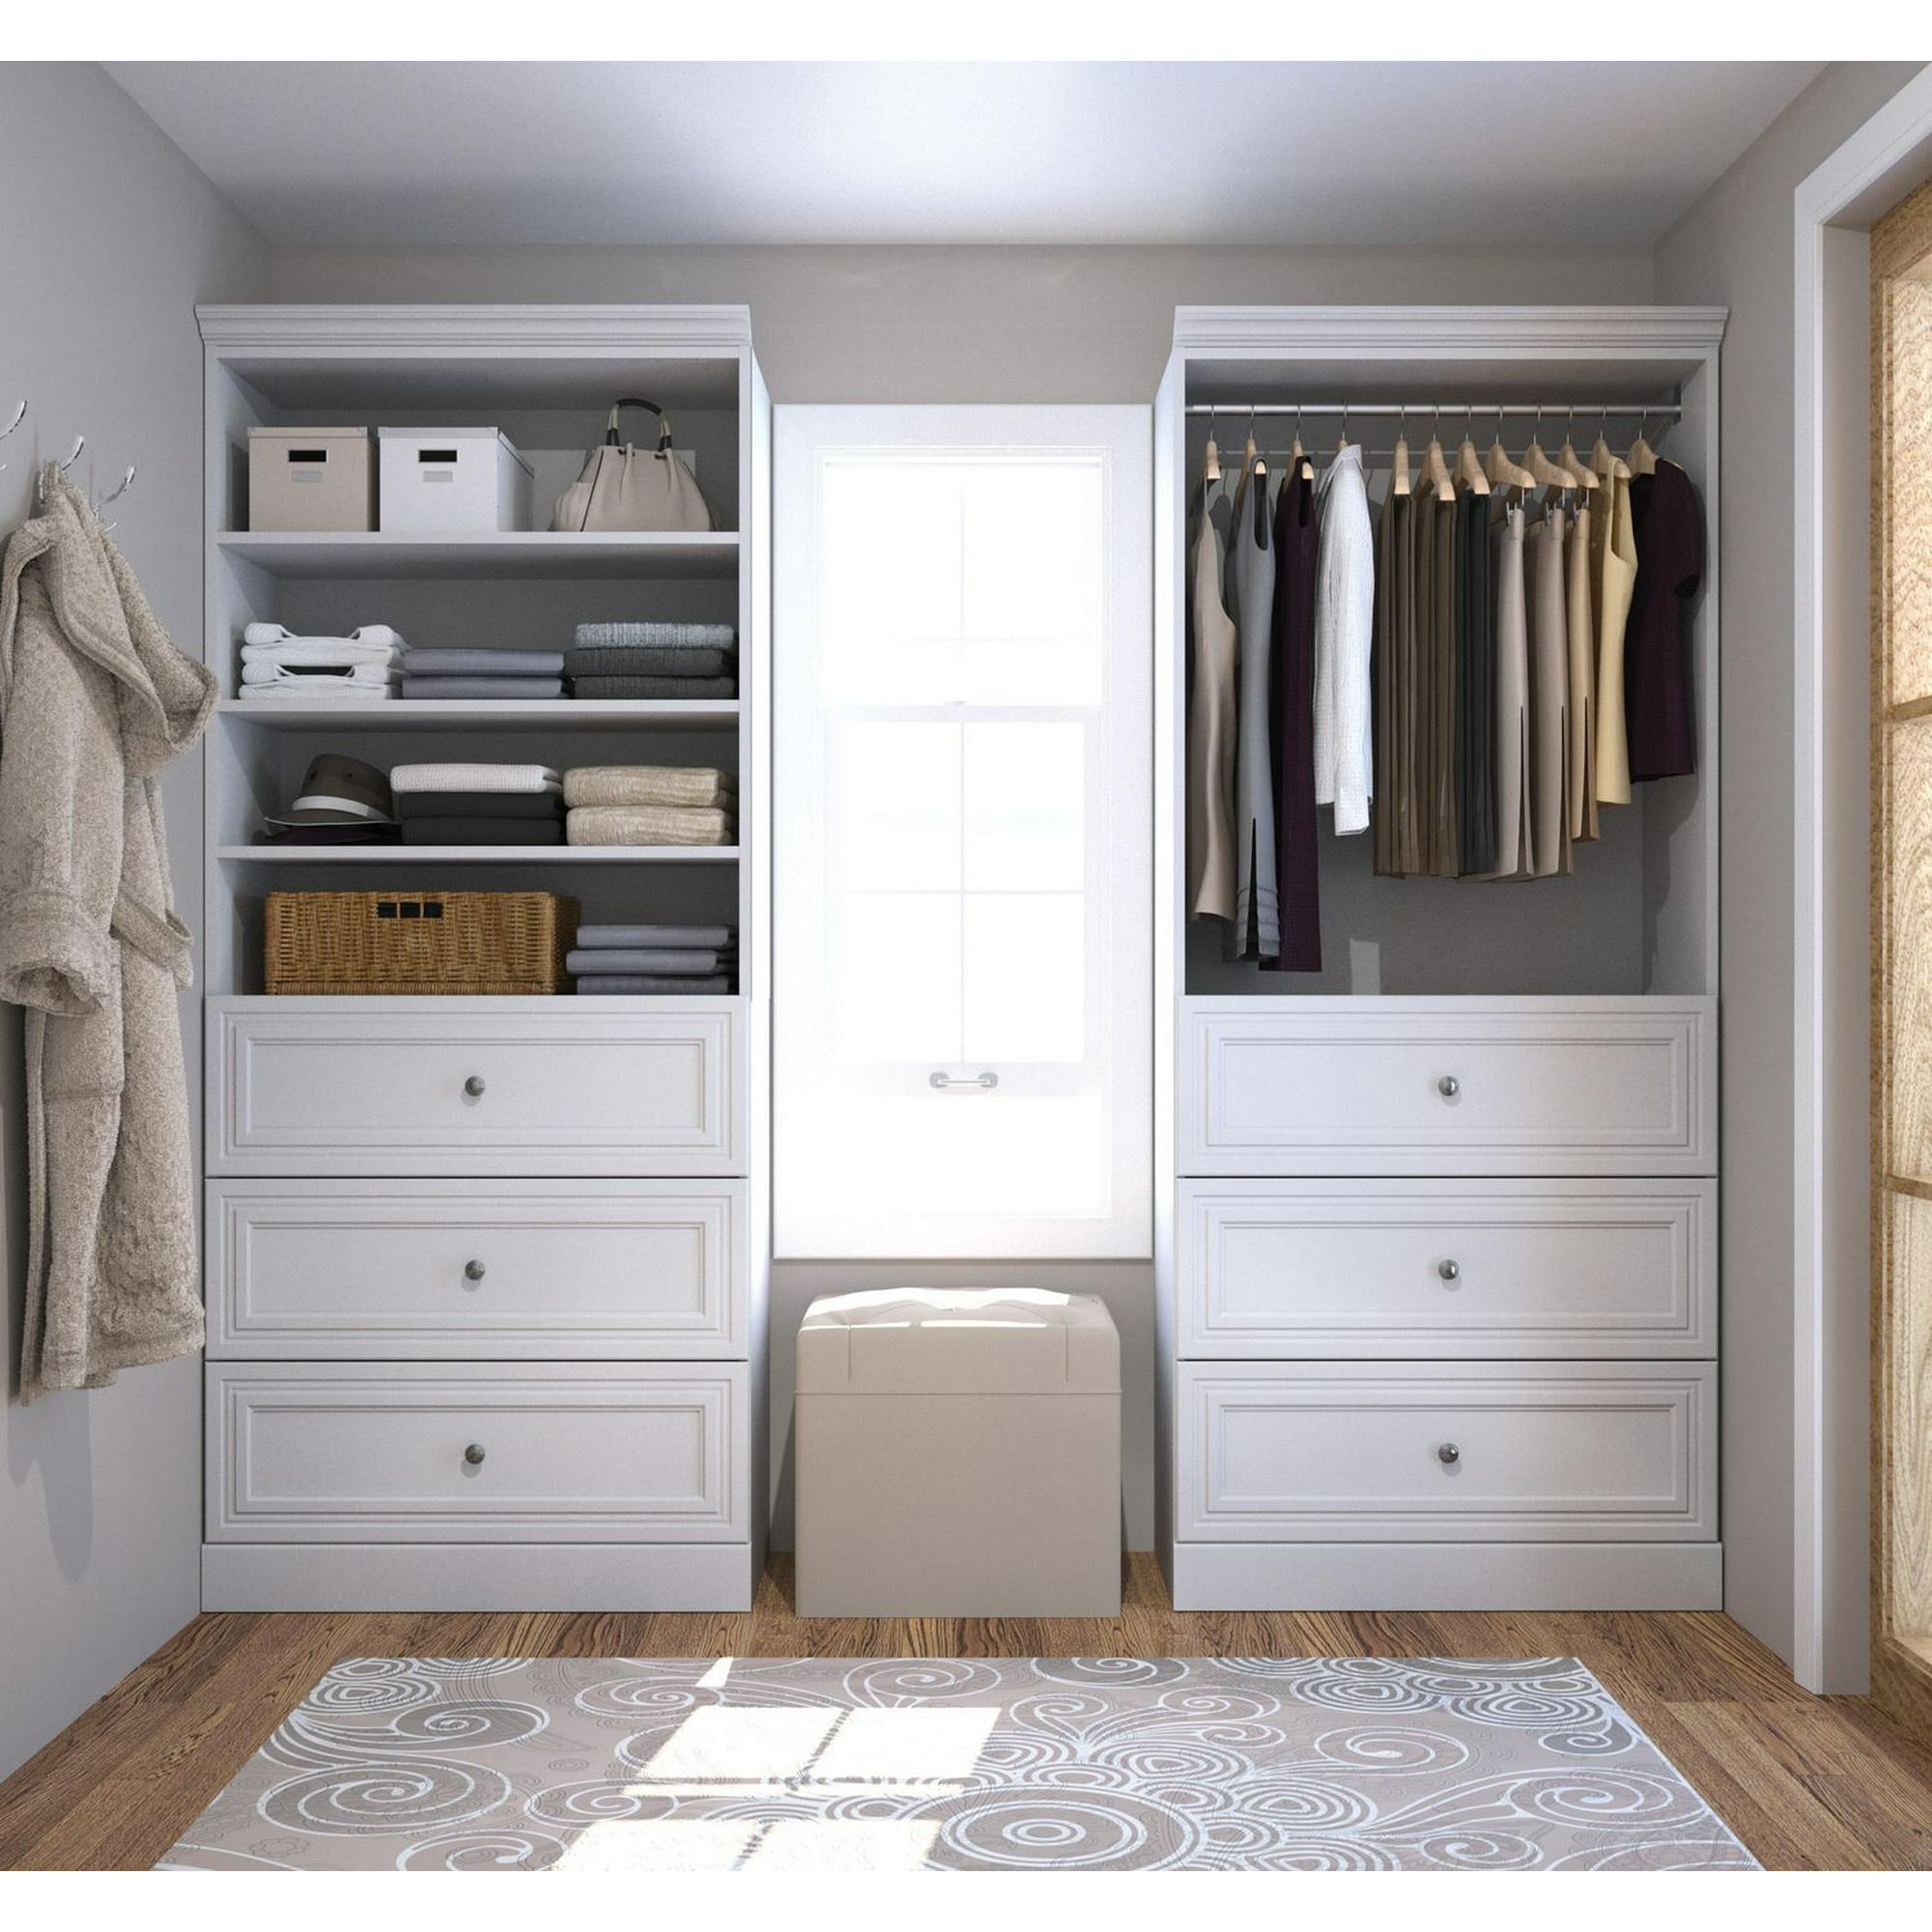 Closets and Home Organization » Komponents Laminated Products, Inc.